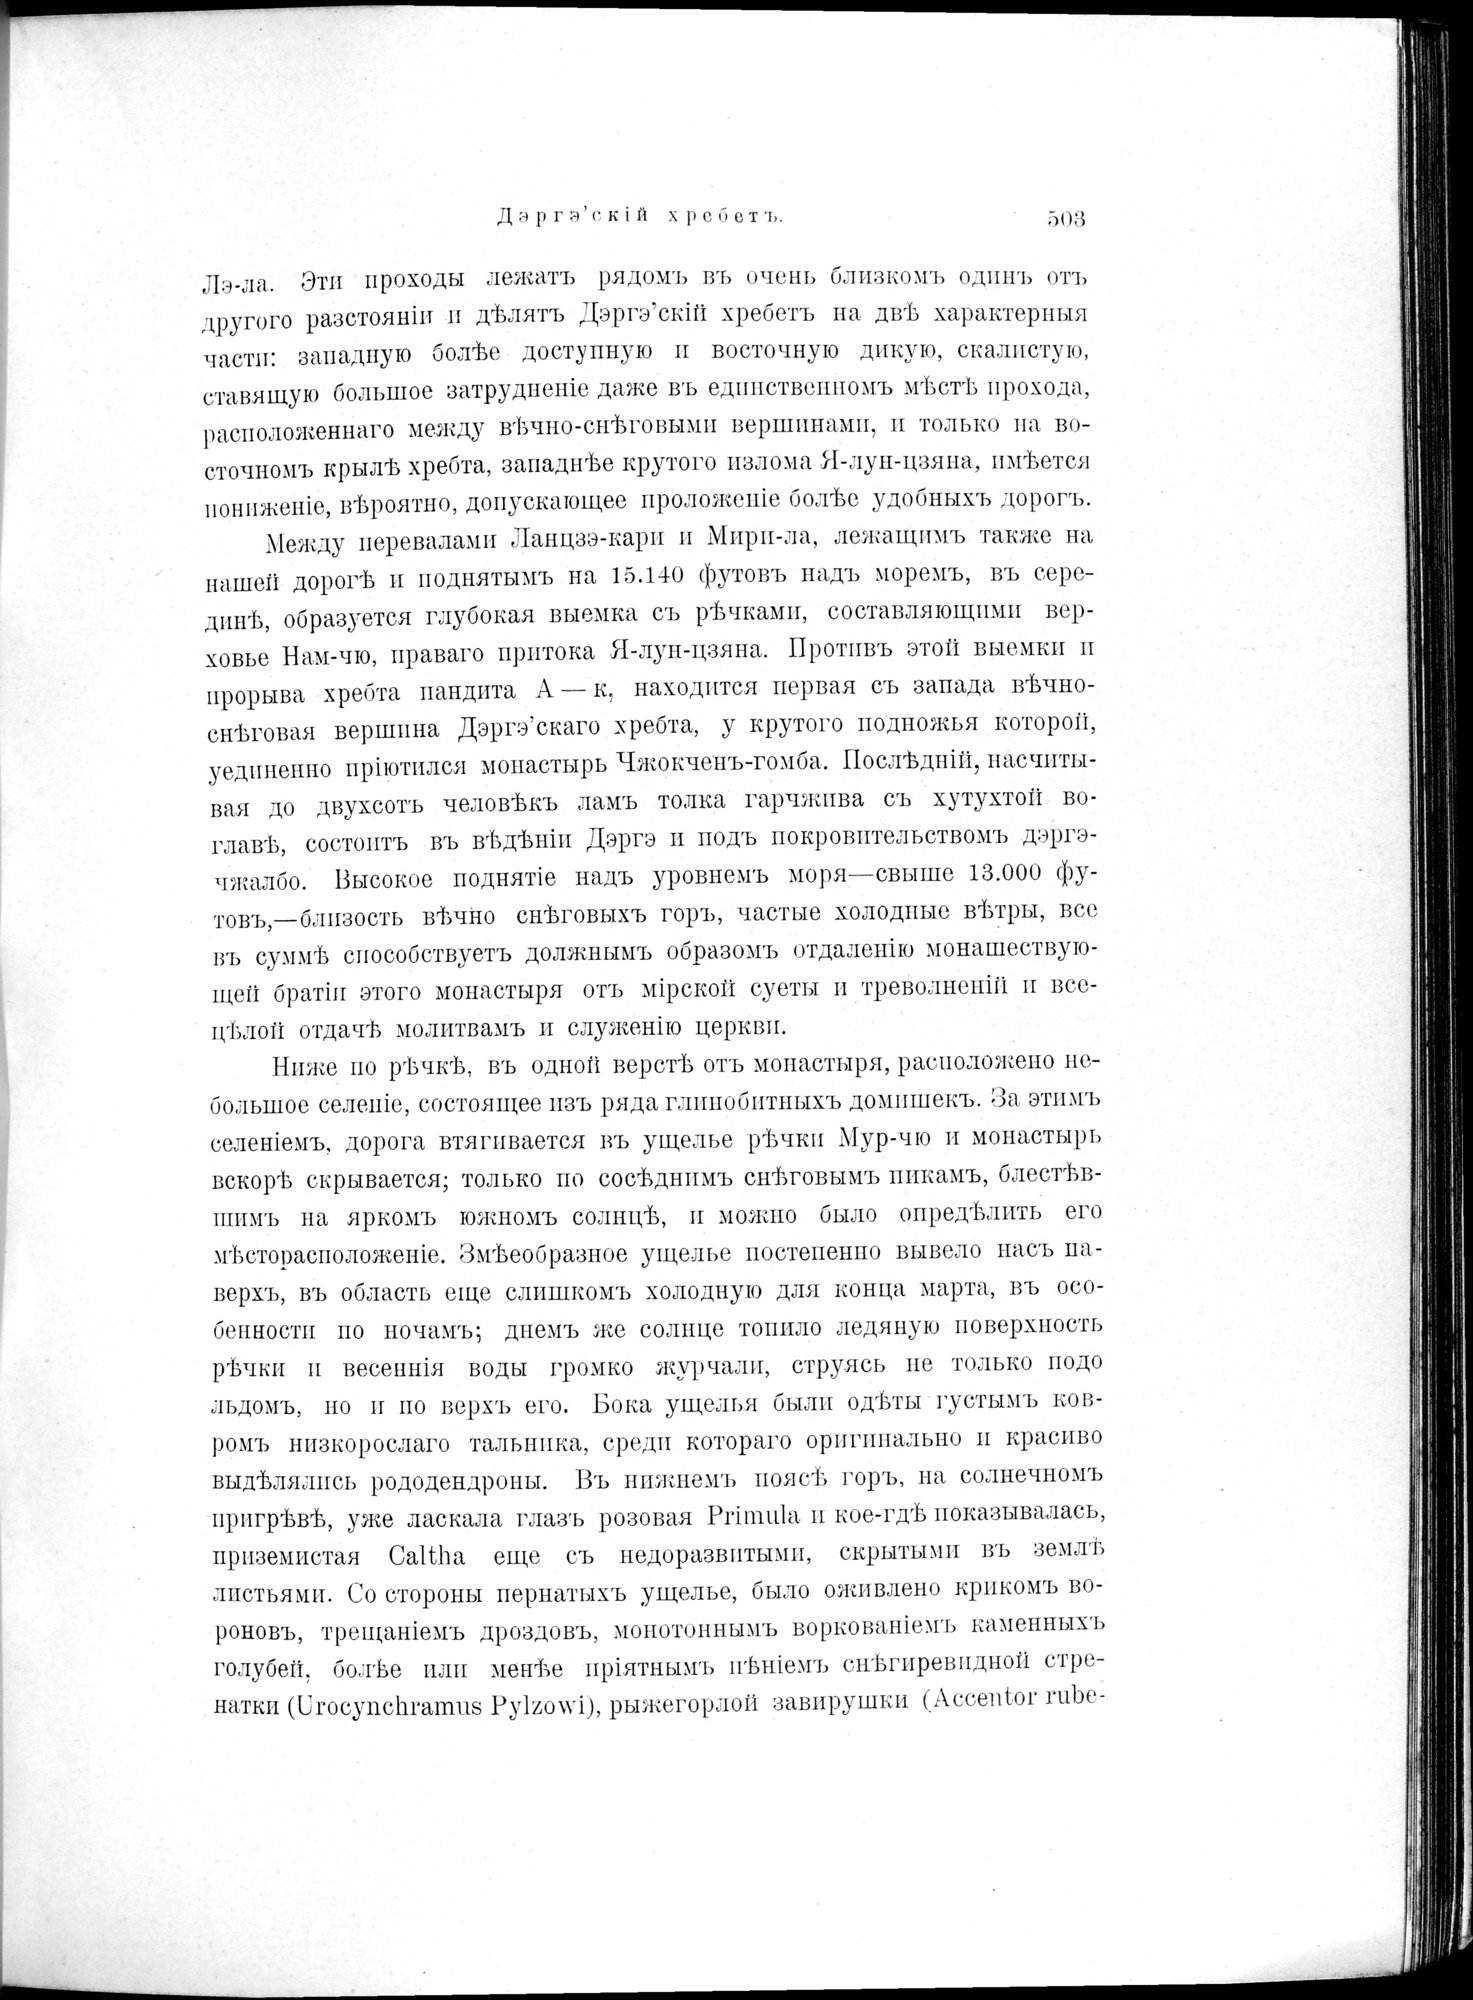 Mongoliia i Kam : vol.2 / Page 319 (Grayscale High Resolution Image)